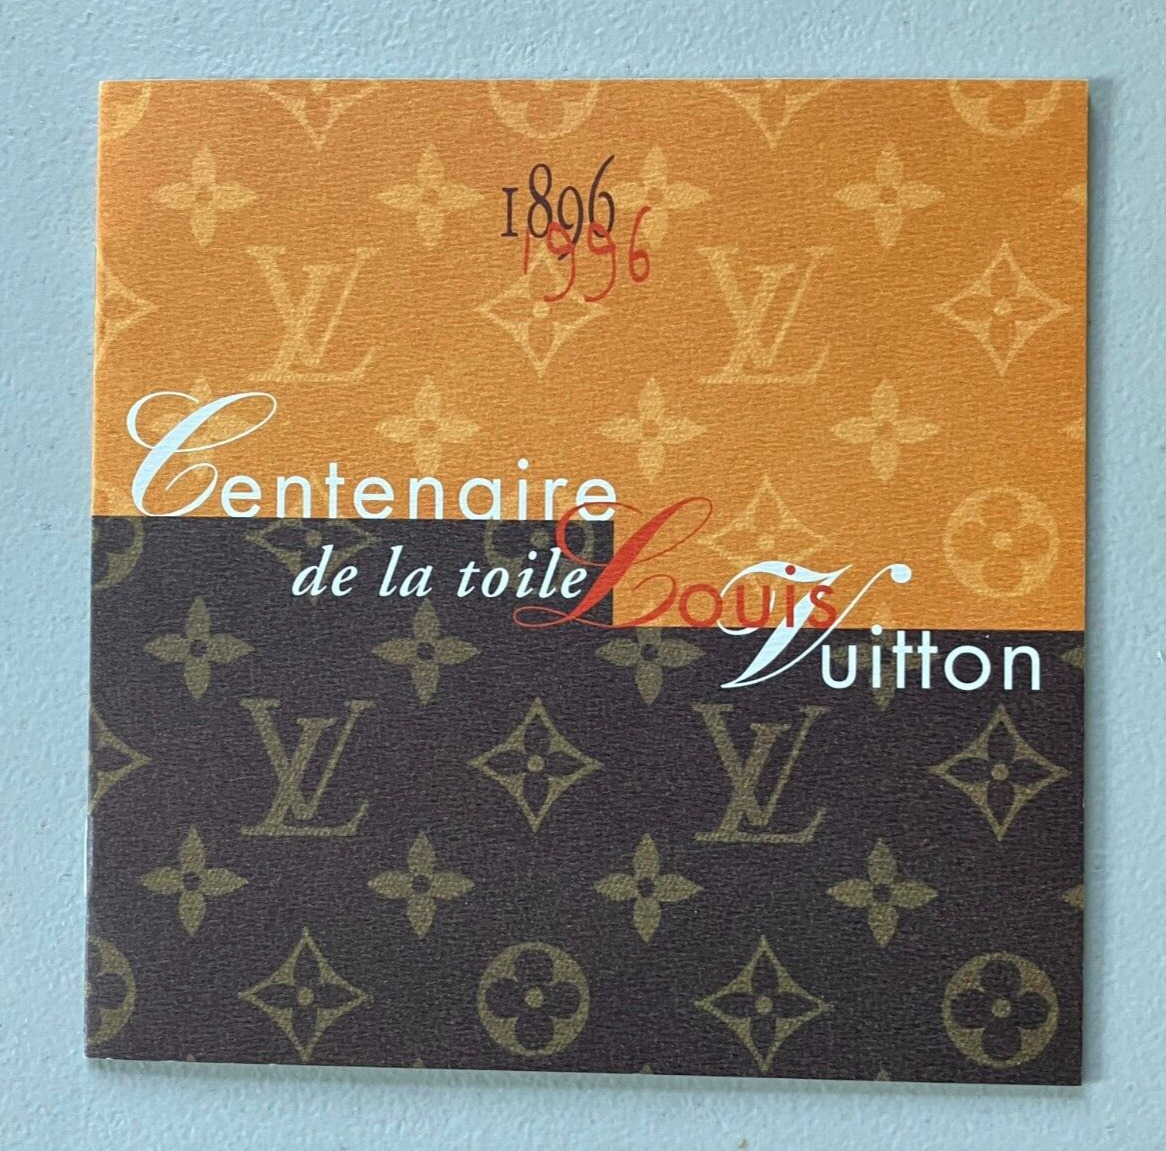 Louis Vuitton 100 Years Centennial Designer Stamp Booklet